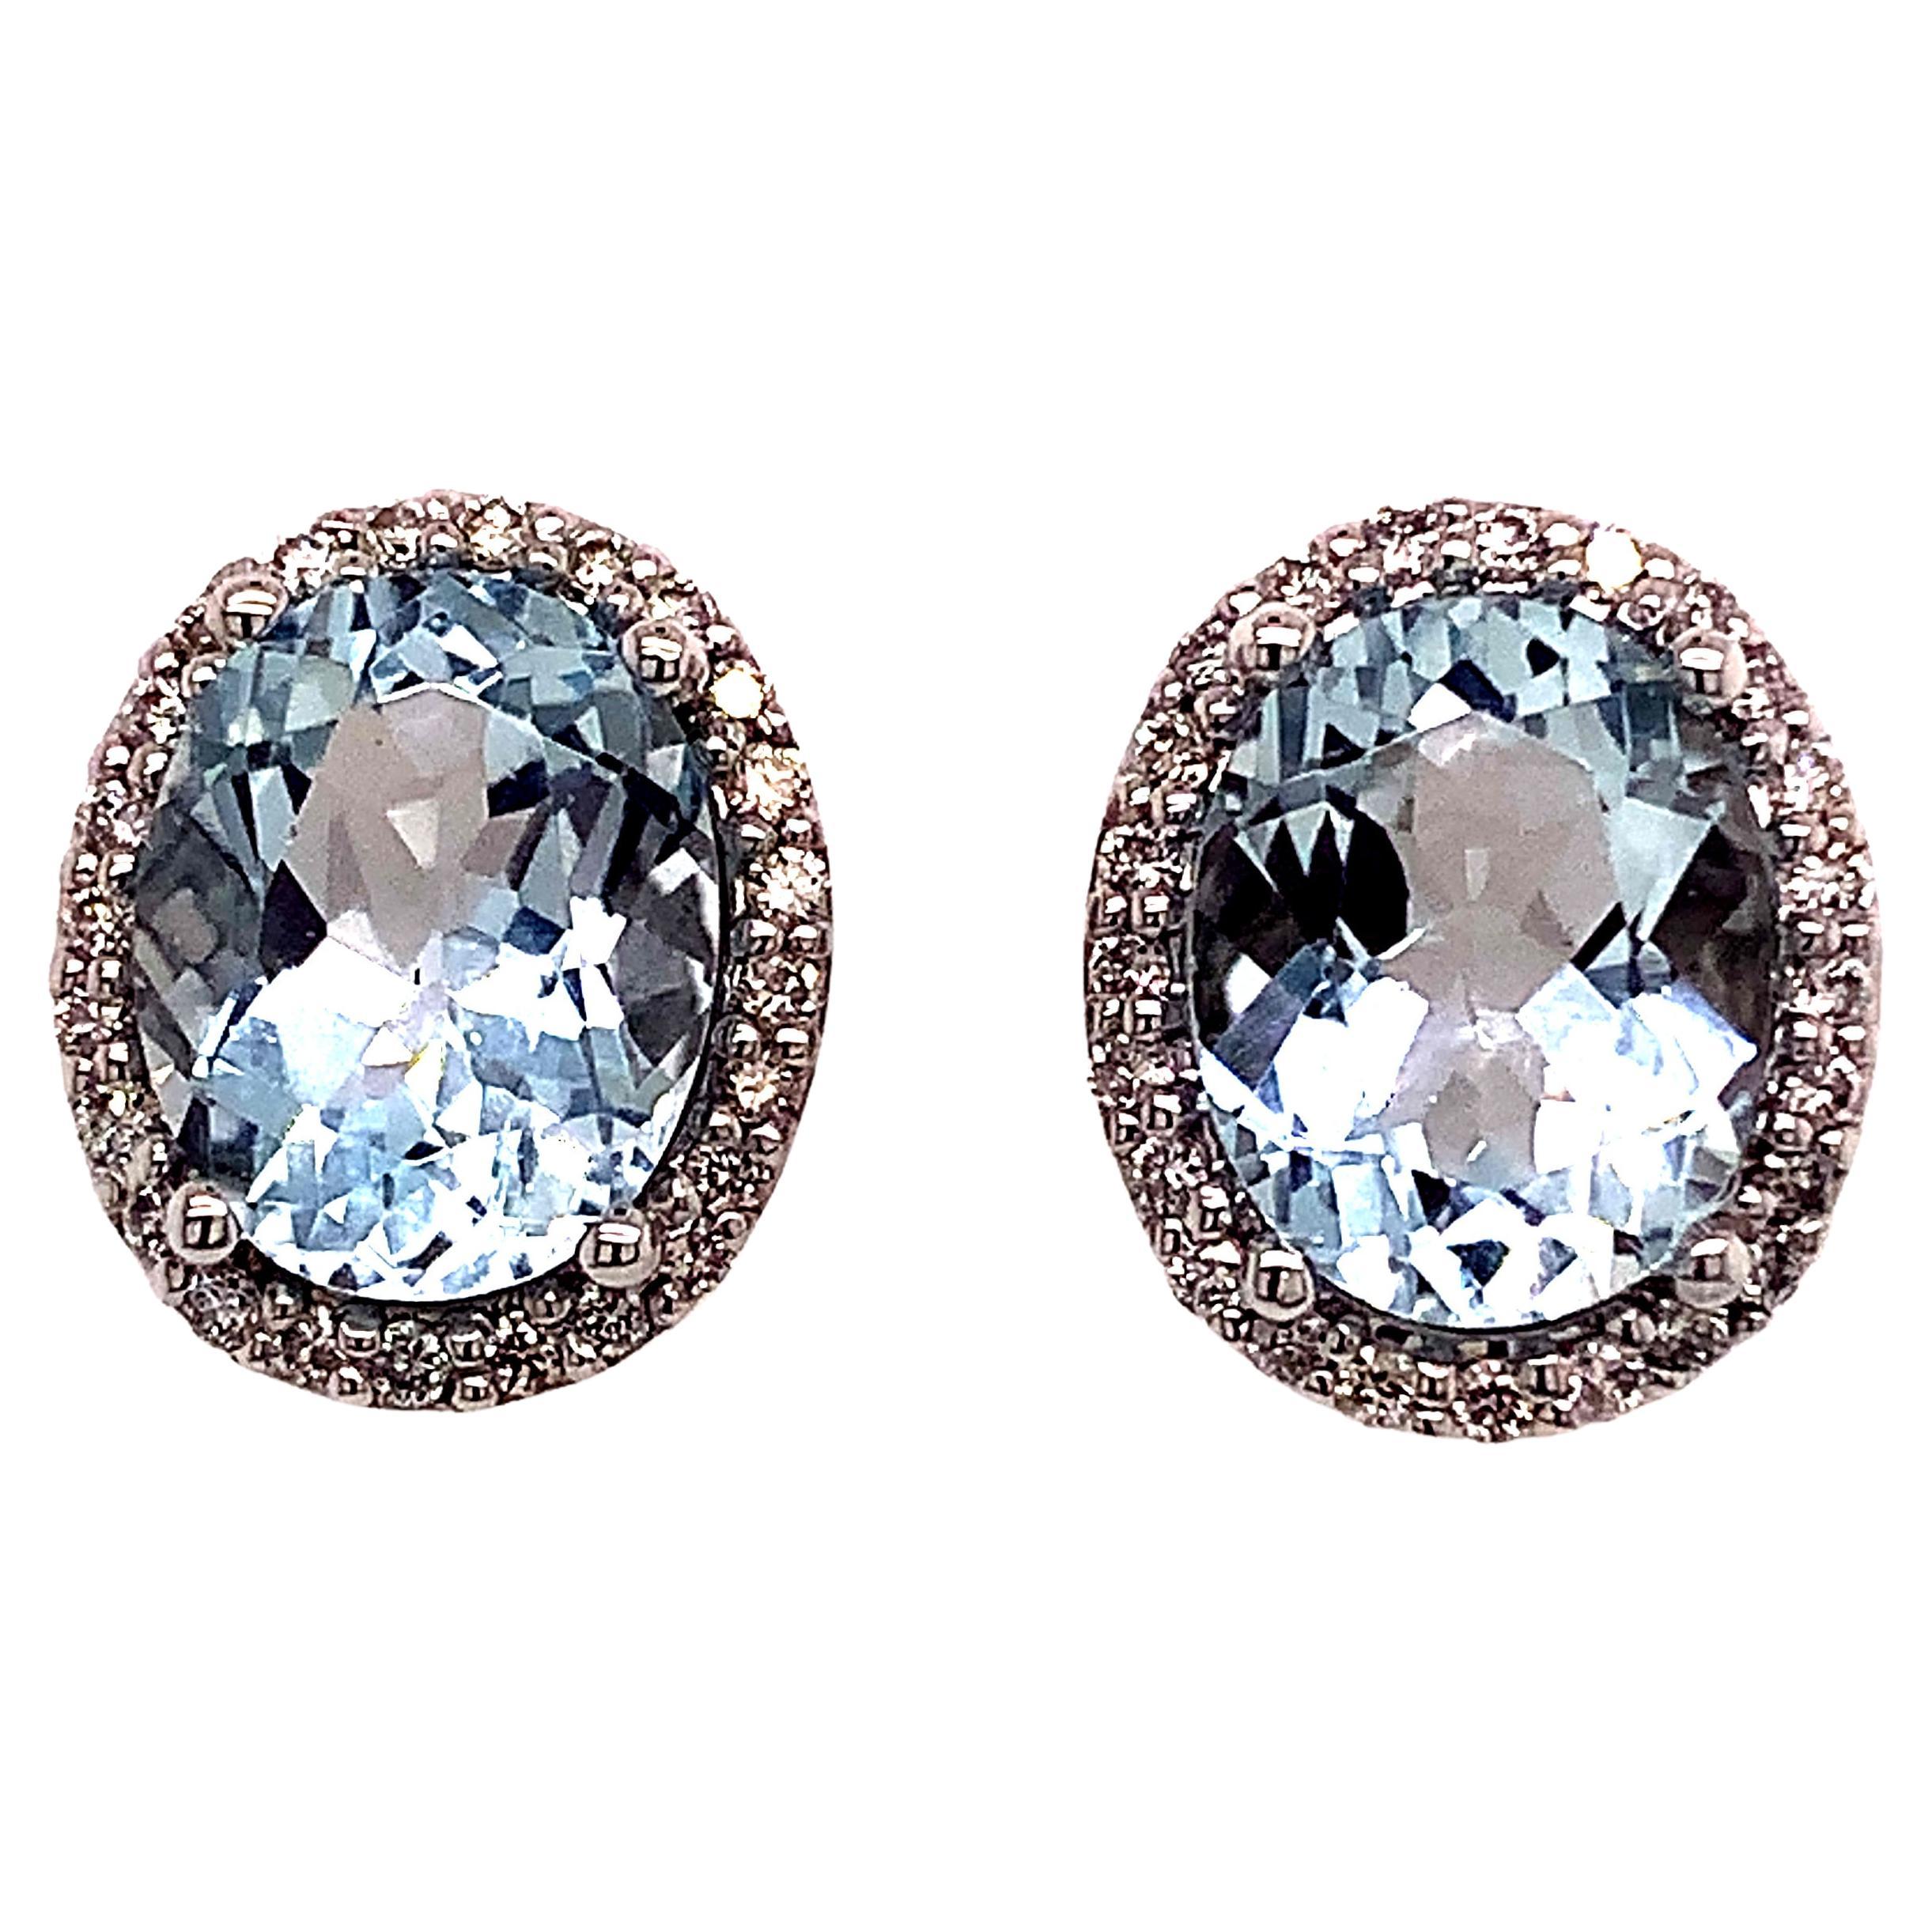 Natural Aquamarine Diamond Stud Earrings 14k WG 5.46 TCW Certified